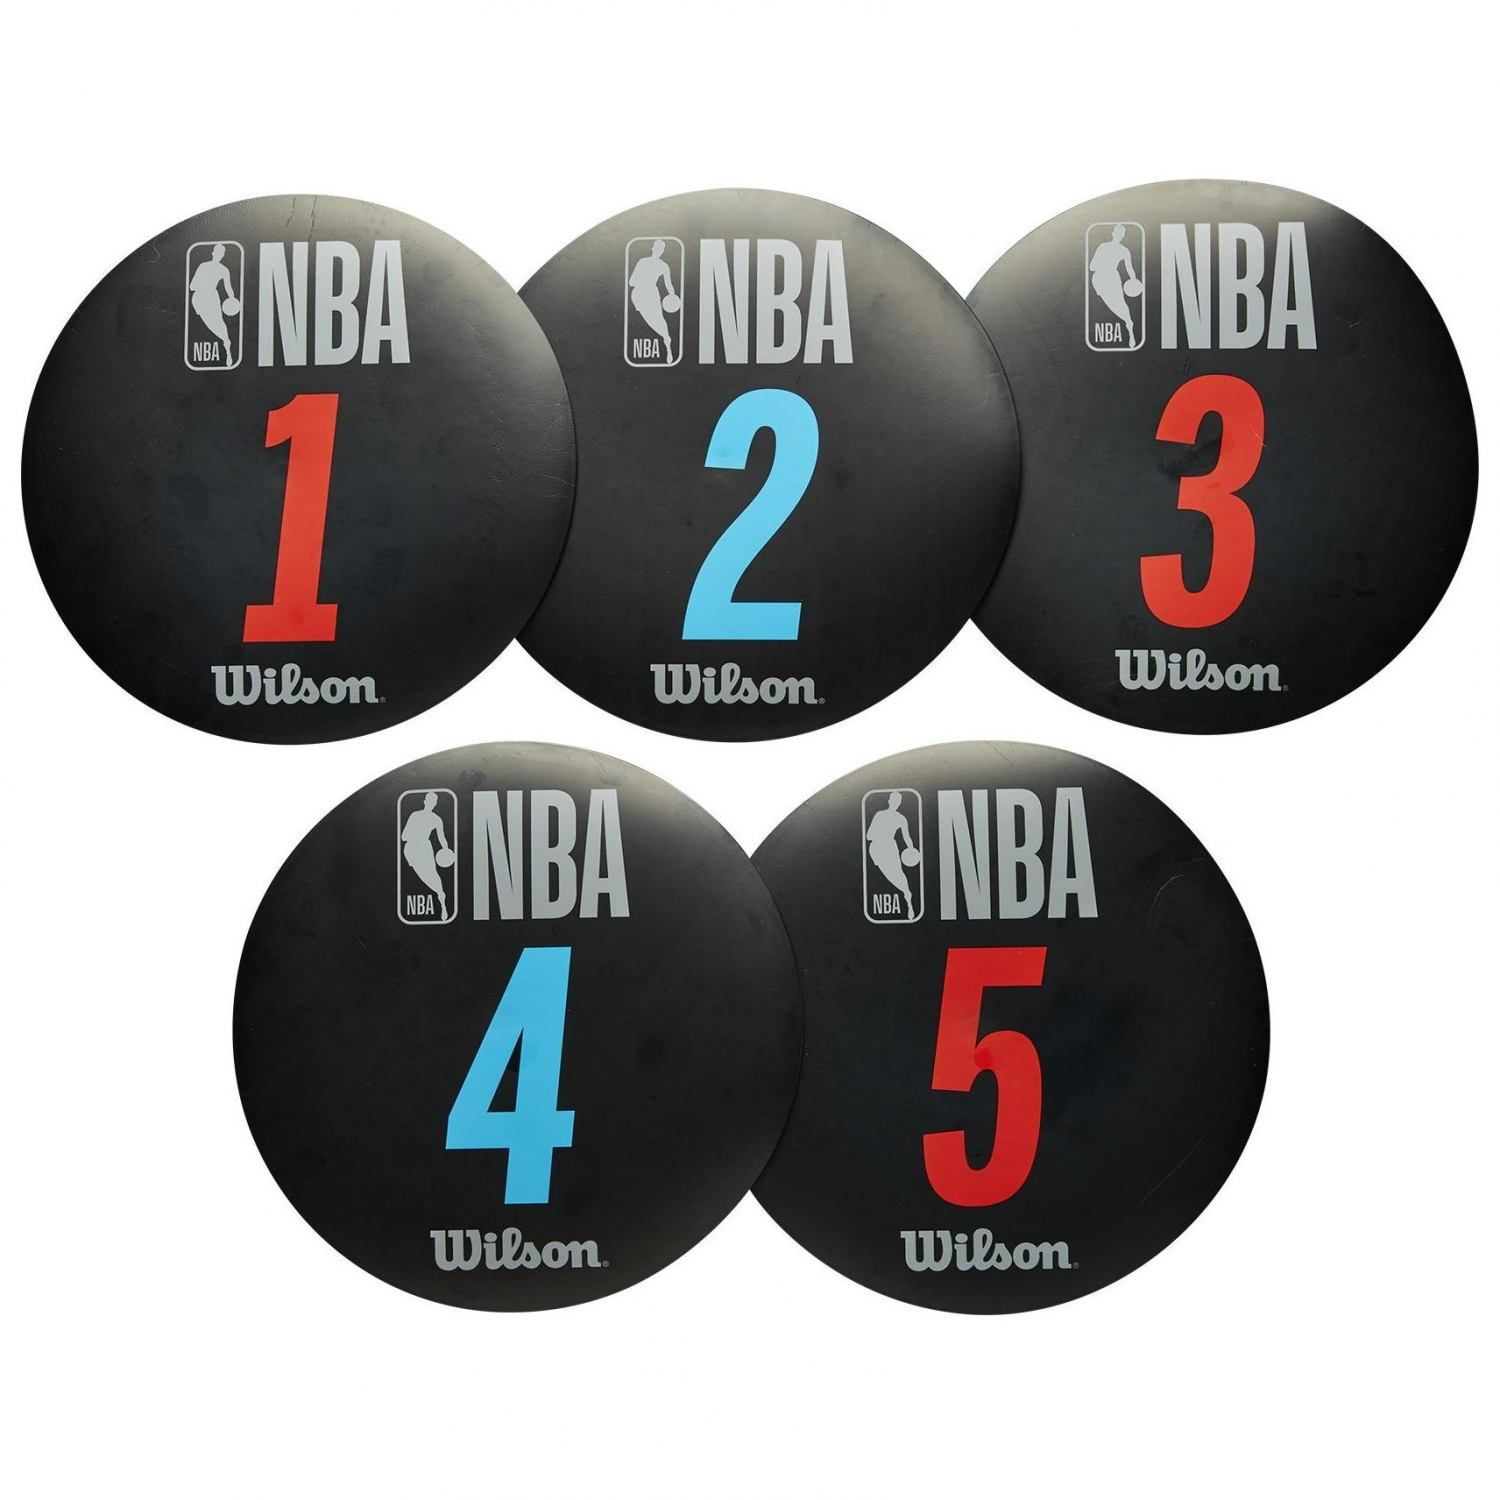 NBA Training markers